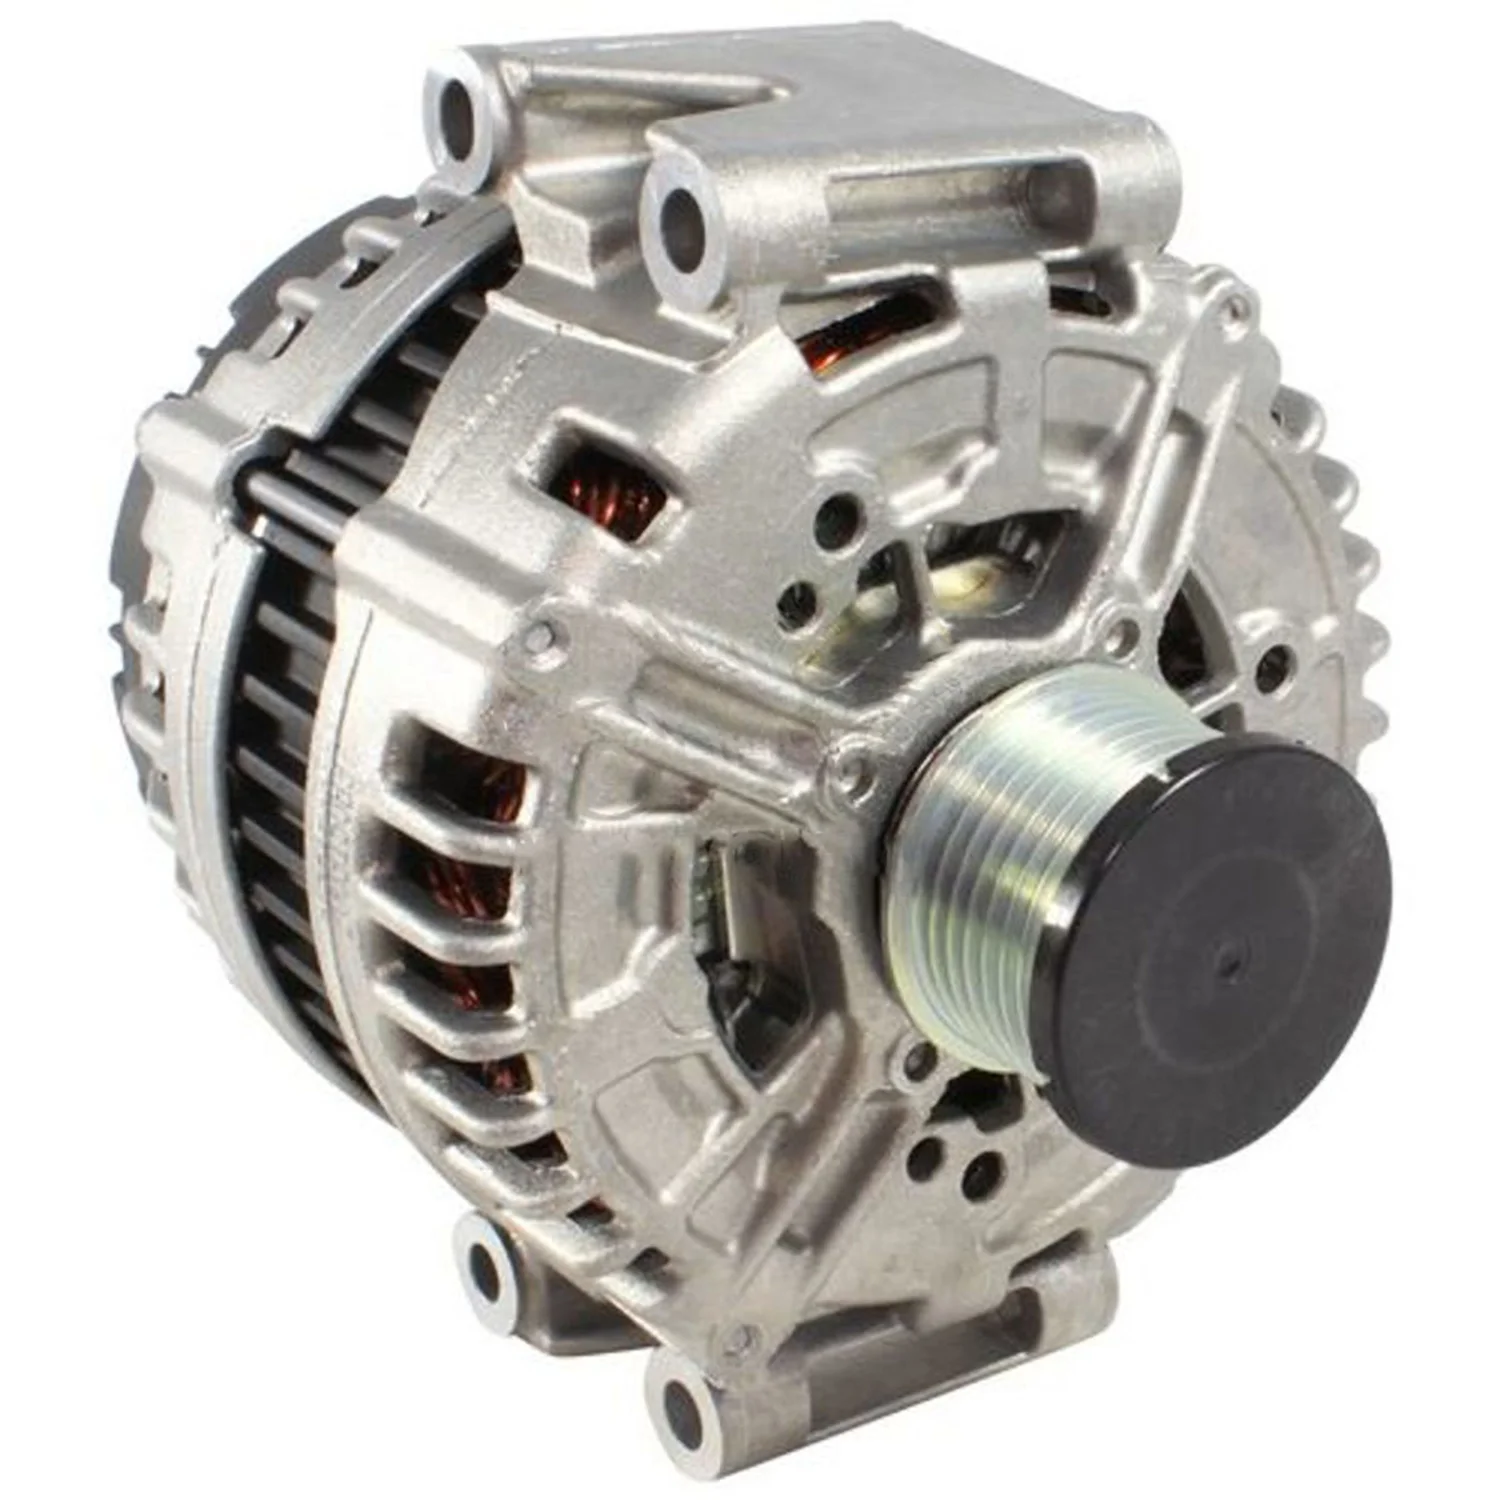 

Auto Dynamo Alternator Generator For BSH Delco Mercedbenz VLEO A0505 0121813020 0121813120 0141541302 0986048960 116080 DRA0567